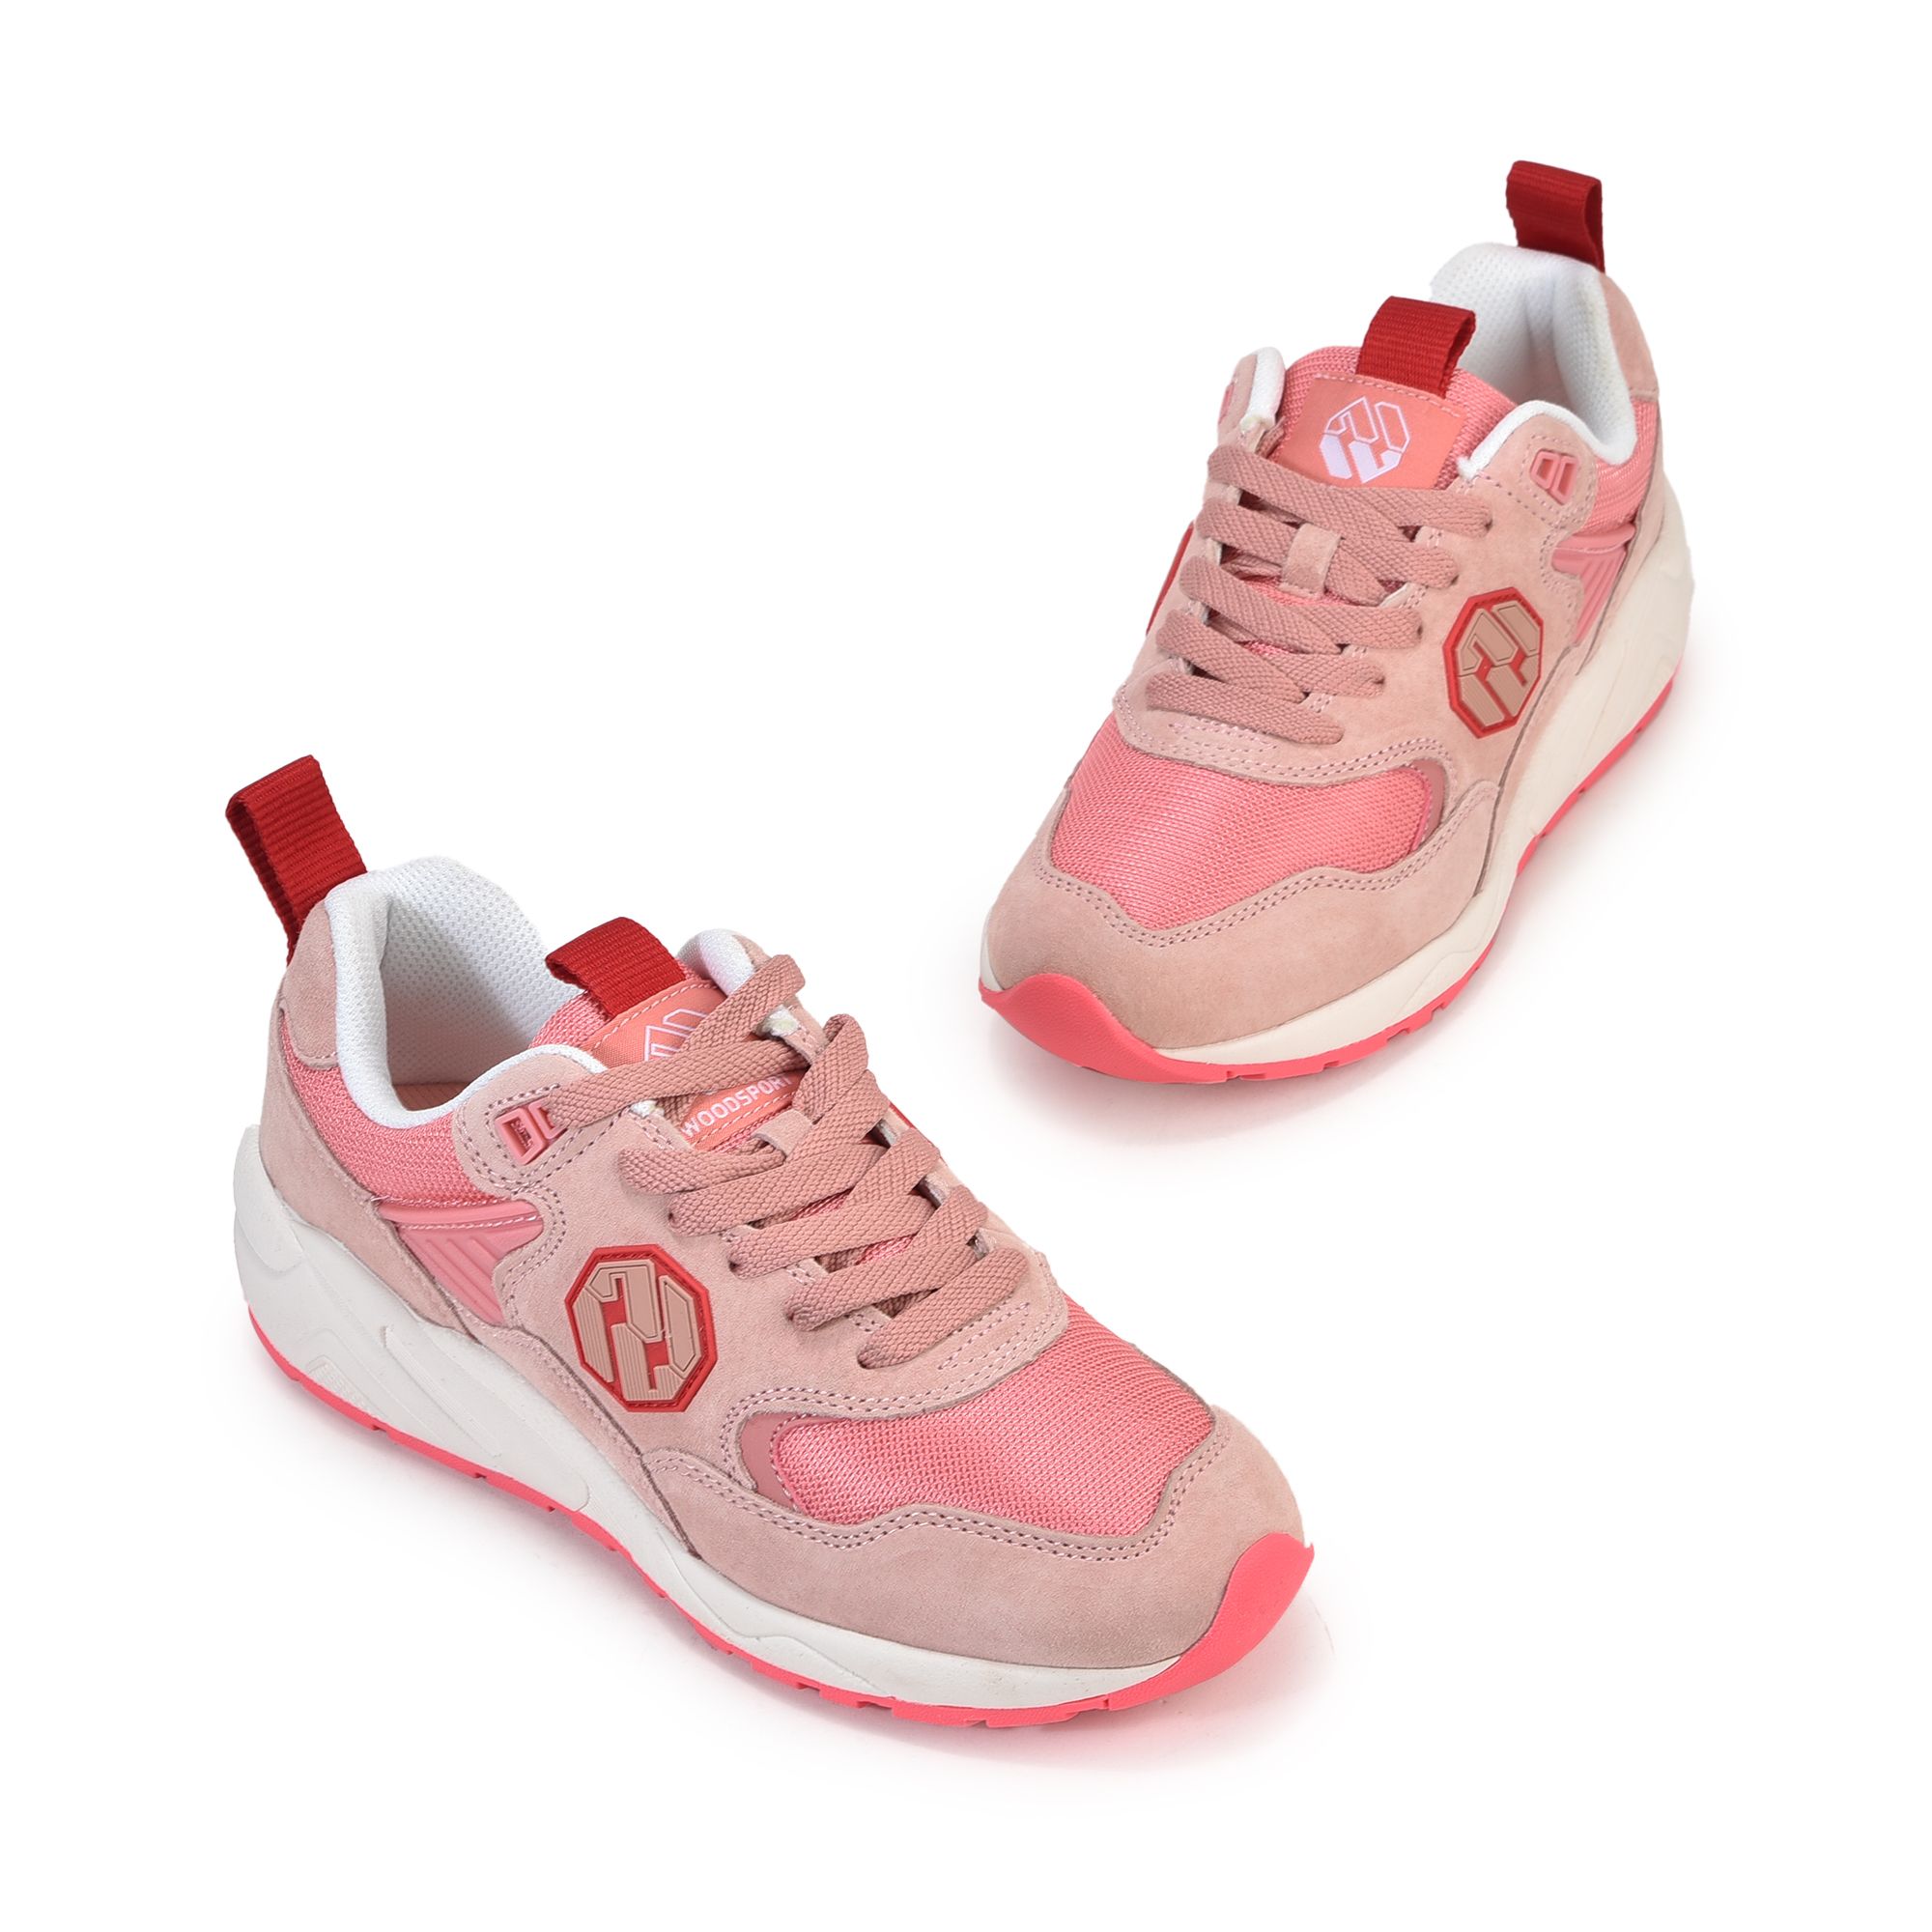 DKNY Little Girls Light Pink Slip On Sneakers